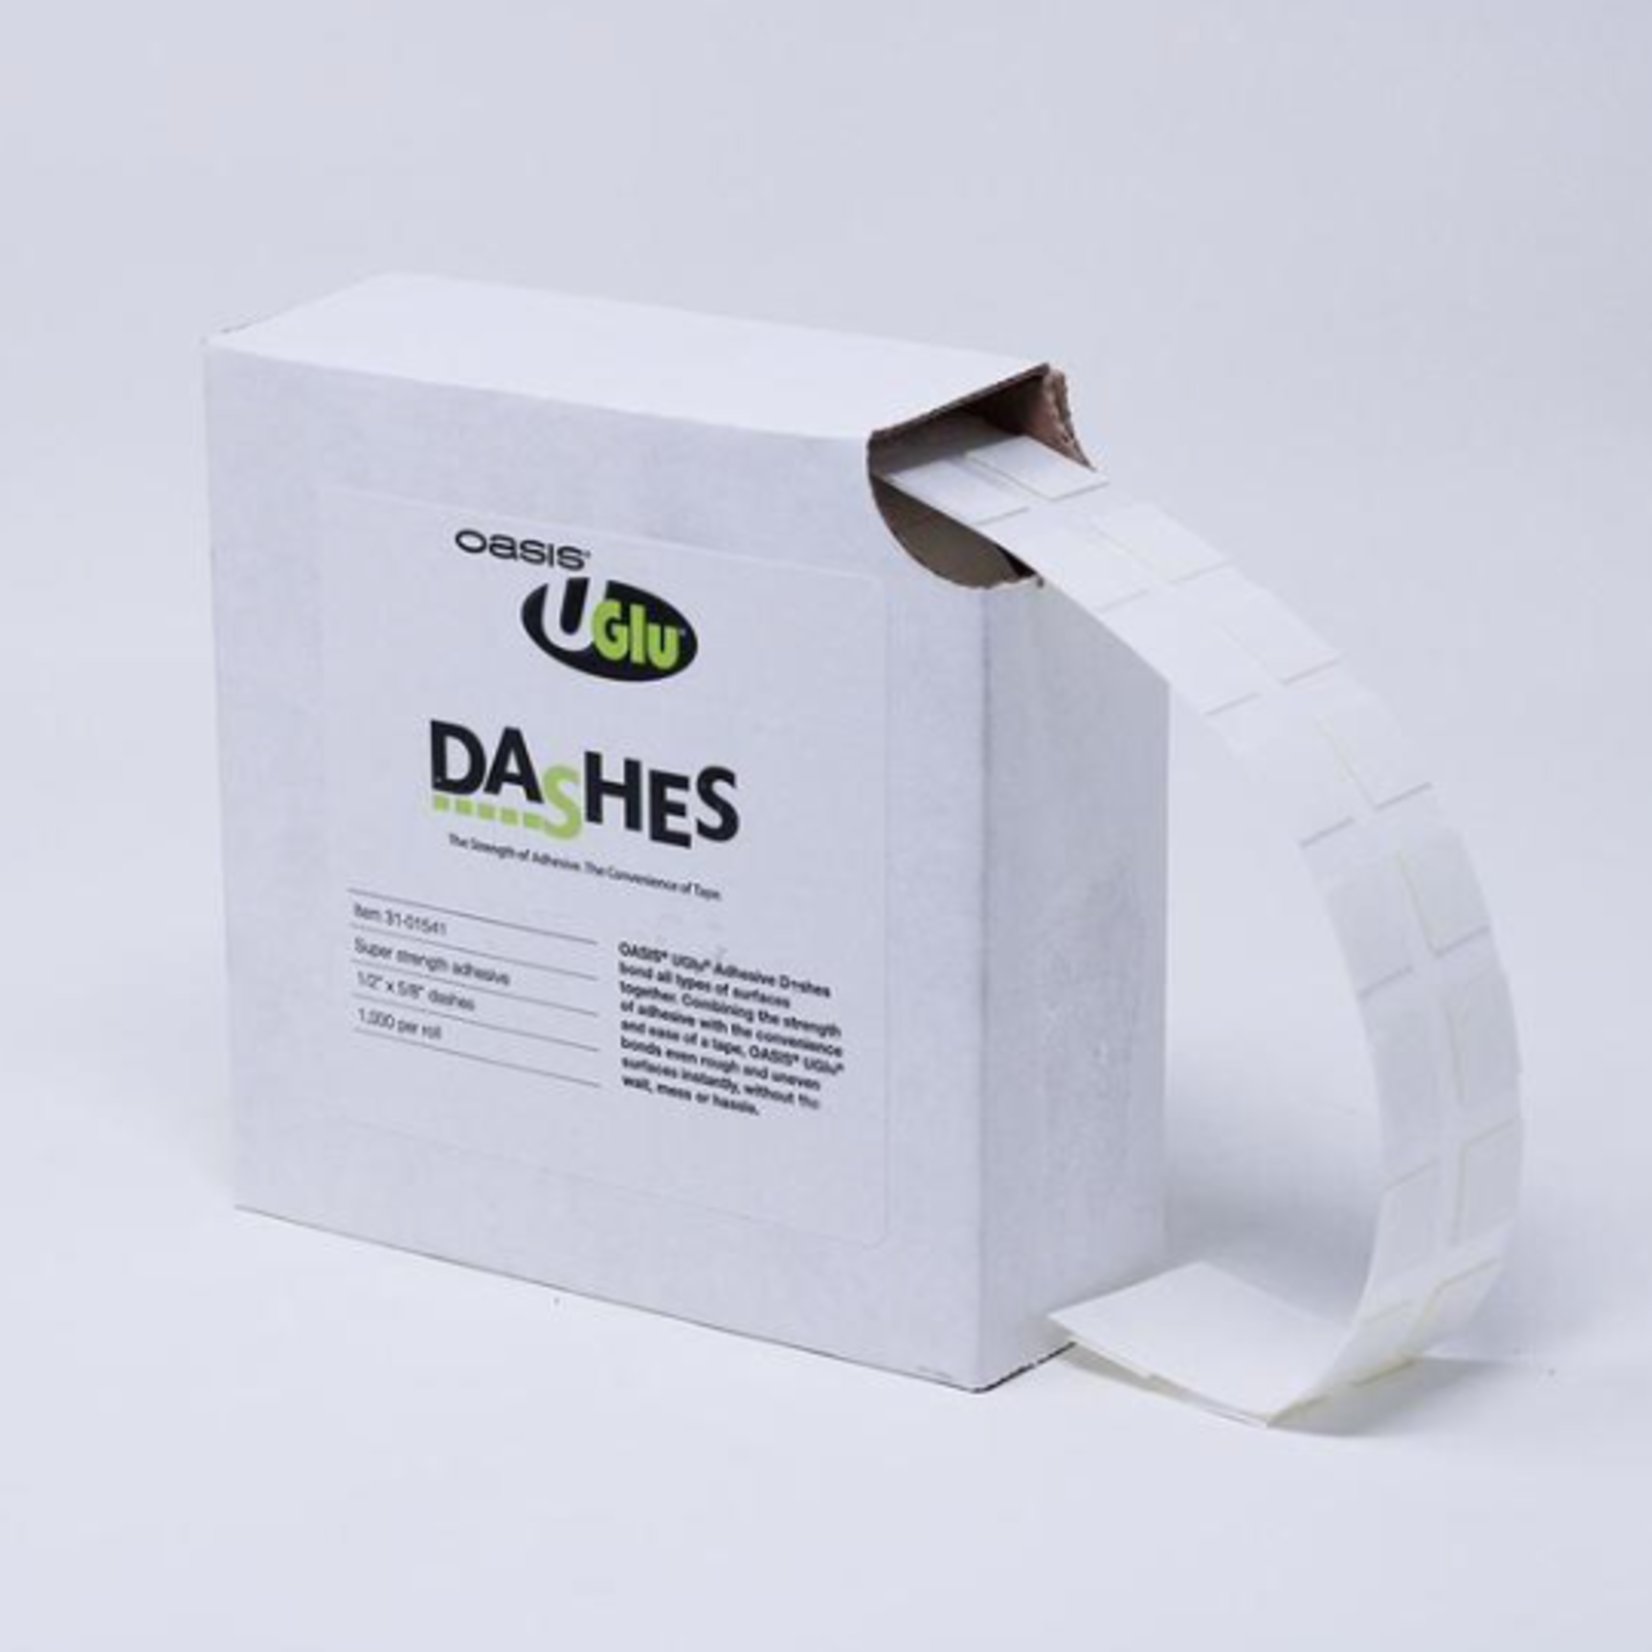 OASIS Uglu Adhesive Dash - 1,000/Roll - QUALITY WHOLESALE